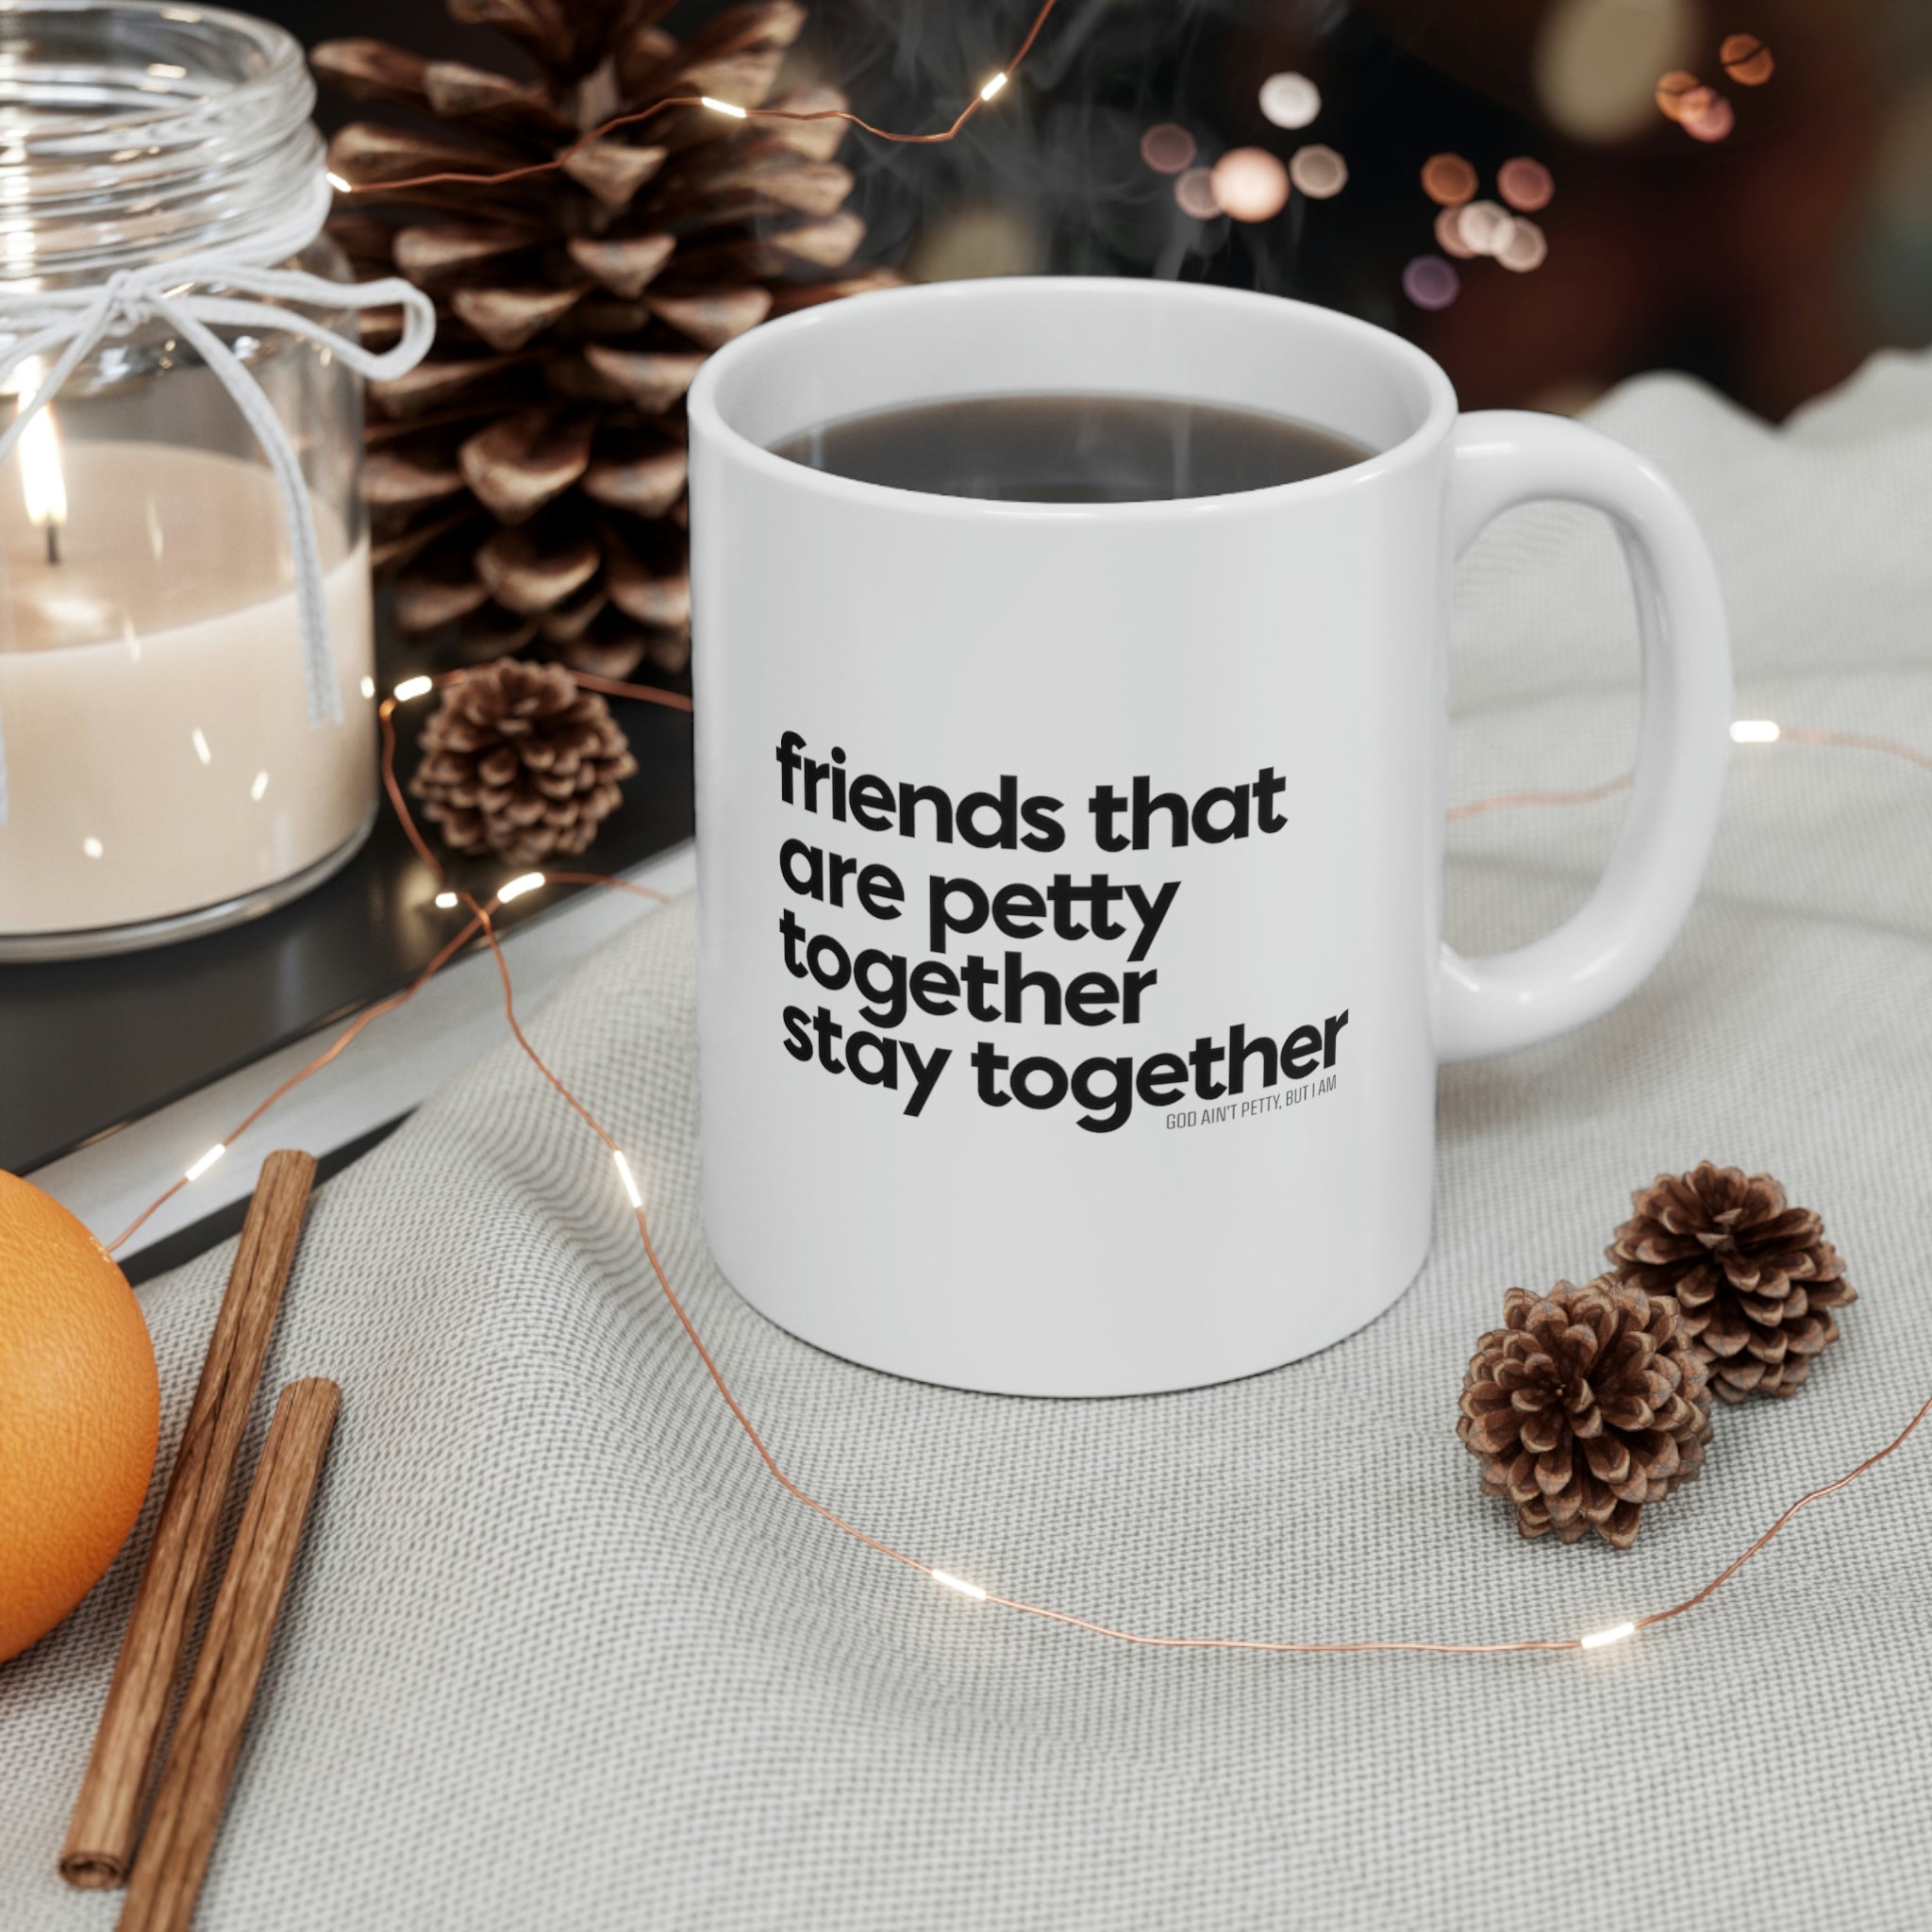 Friends that are petty together stay together Mug 11oz (White/Black)-Mug-The Original God Ain't Petty But I Am